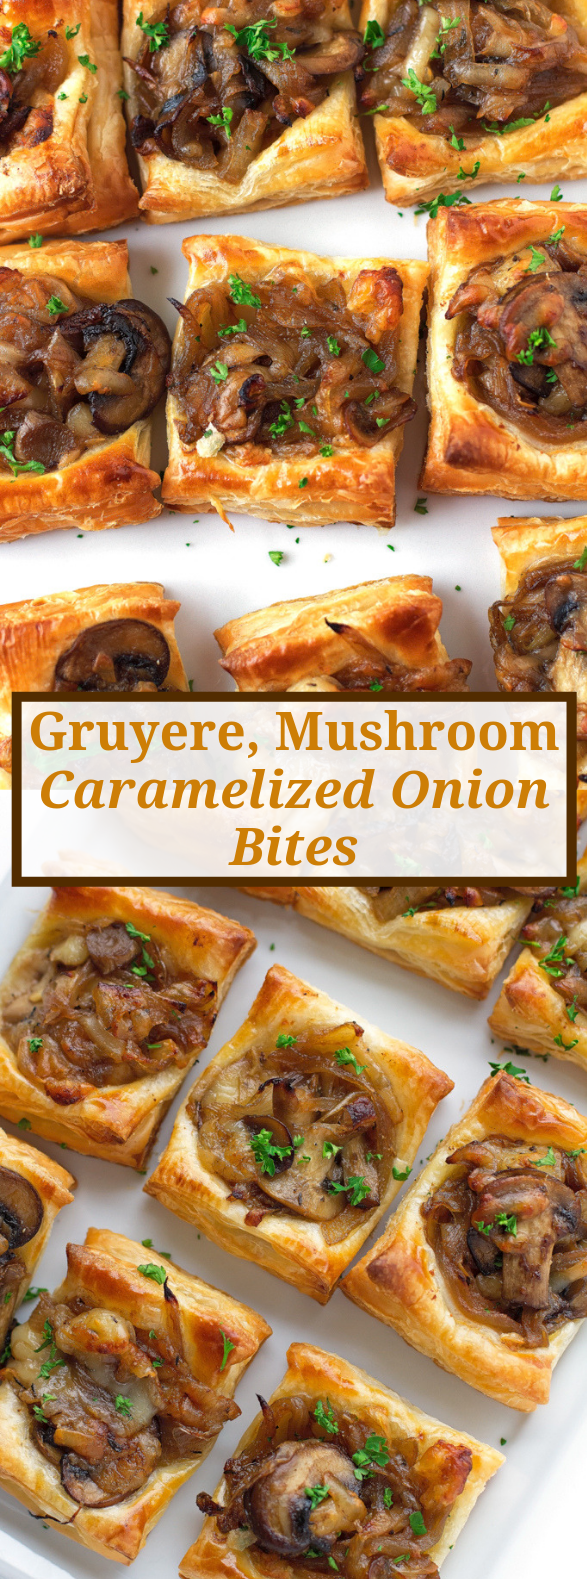 Gruyere, Mushroom, & Caramelized Onion Bites #appetizer #pastryrecipe